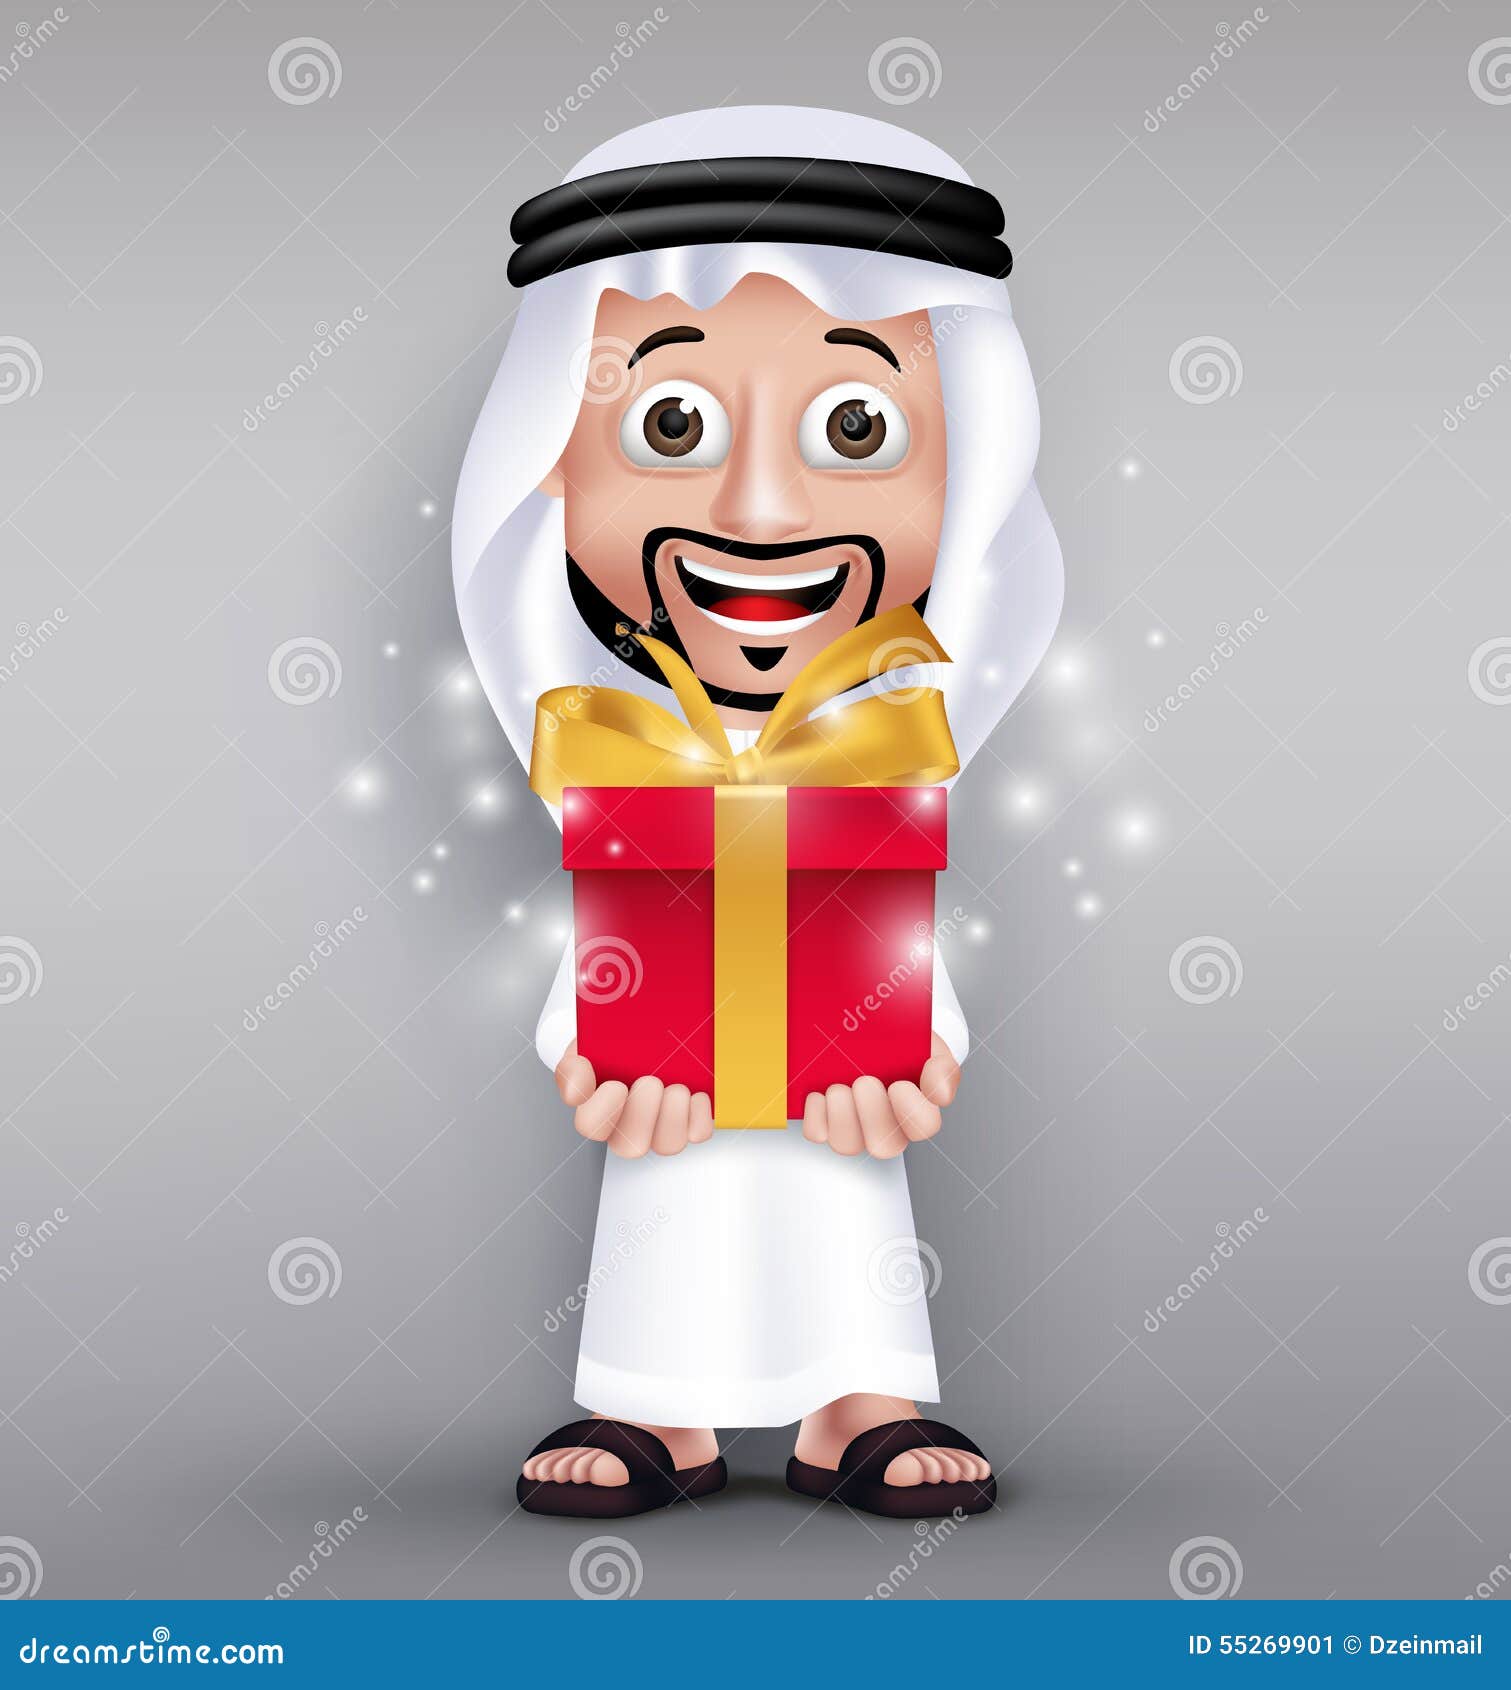 realistic saudi arab man wearing thobe giving red gift